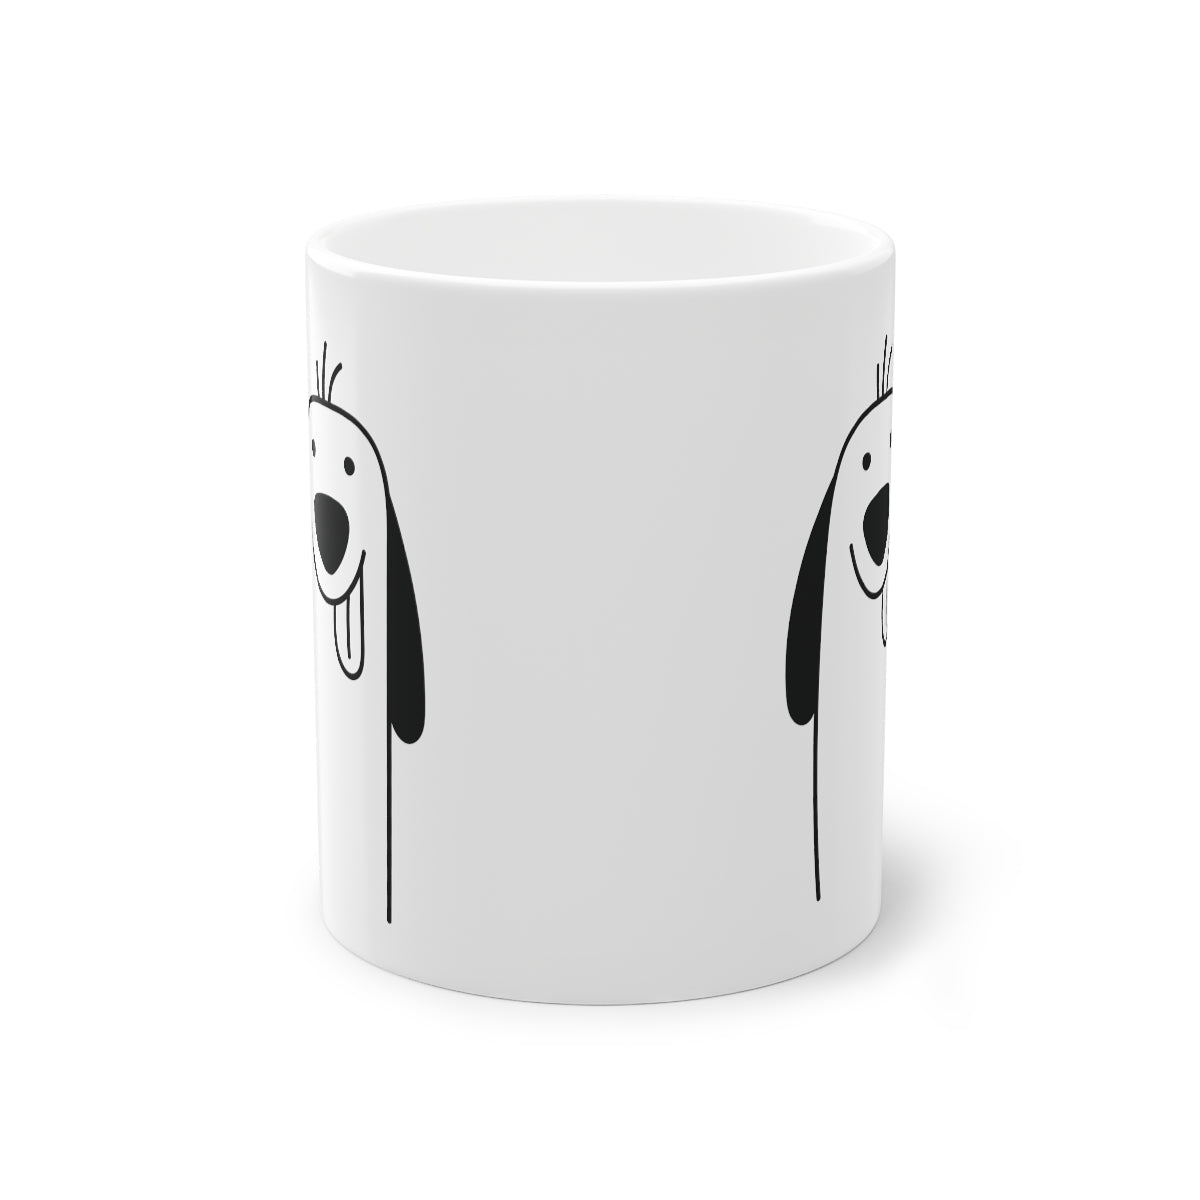 Cute dog Spaniel mug, white, 325 ml / 11 oz Coffee mug, tea mug for kids, children, puppies mug for dog lovers, dog owners